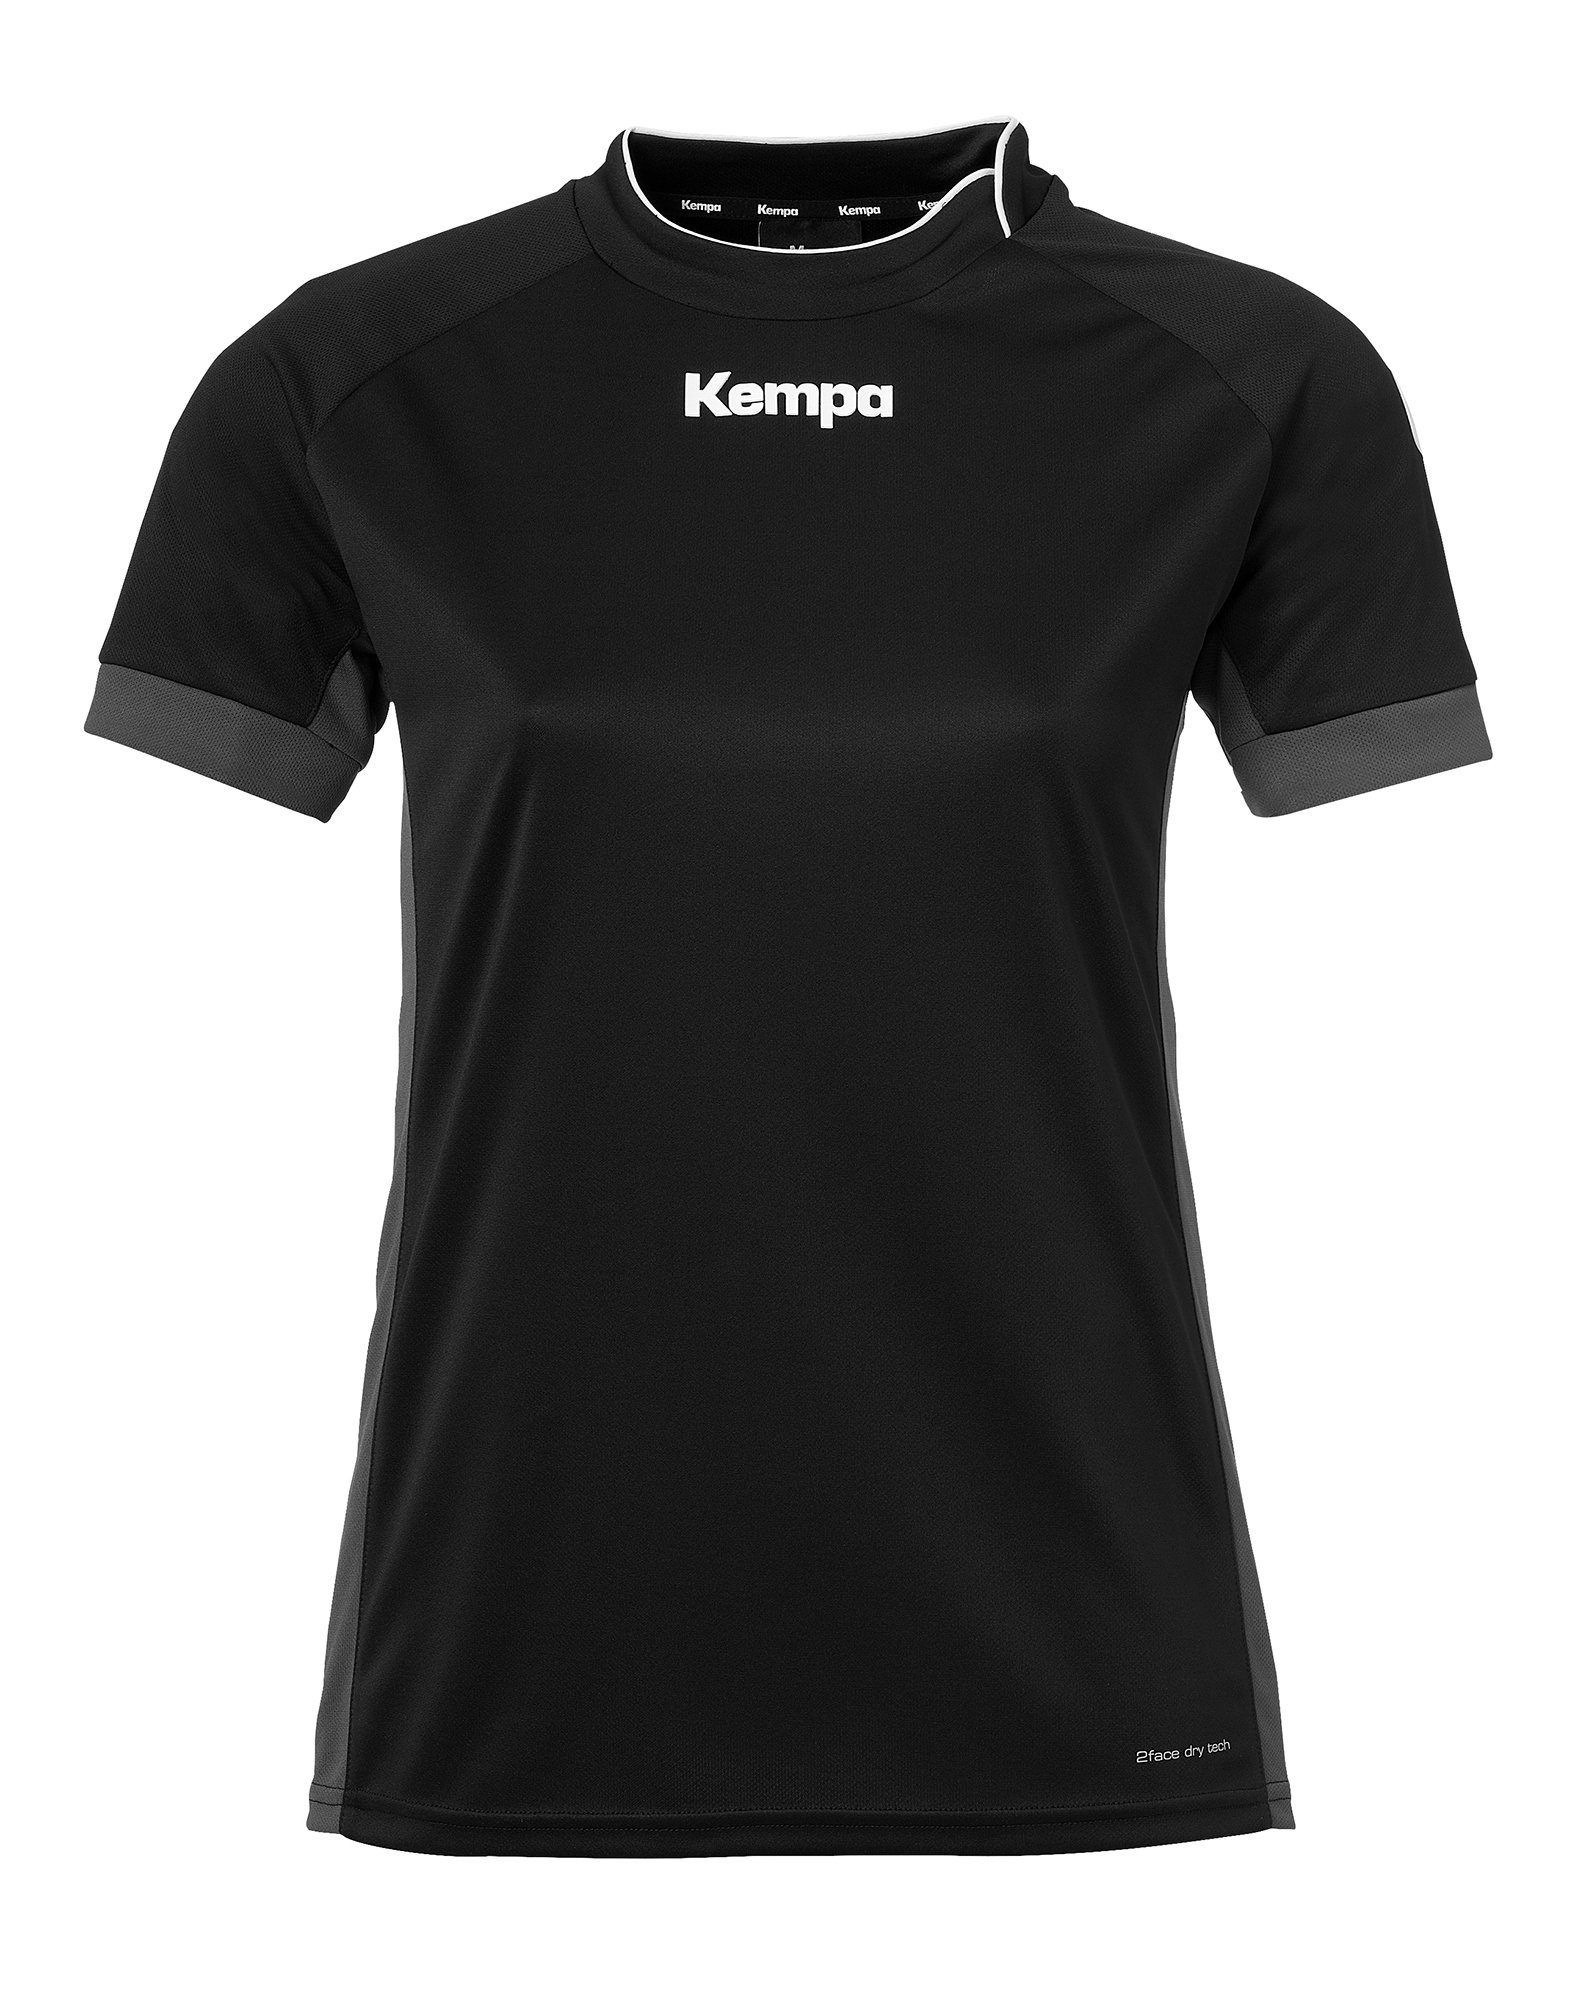 [Viele Lieferungen noch am selben Tag möglich!] Kempa Kurzarmshirt Kempa Shirt schwarz/anthra schnelltrocknend TRIKOT PRIME WOMEN